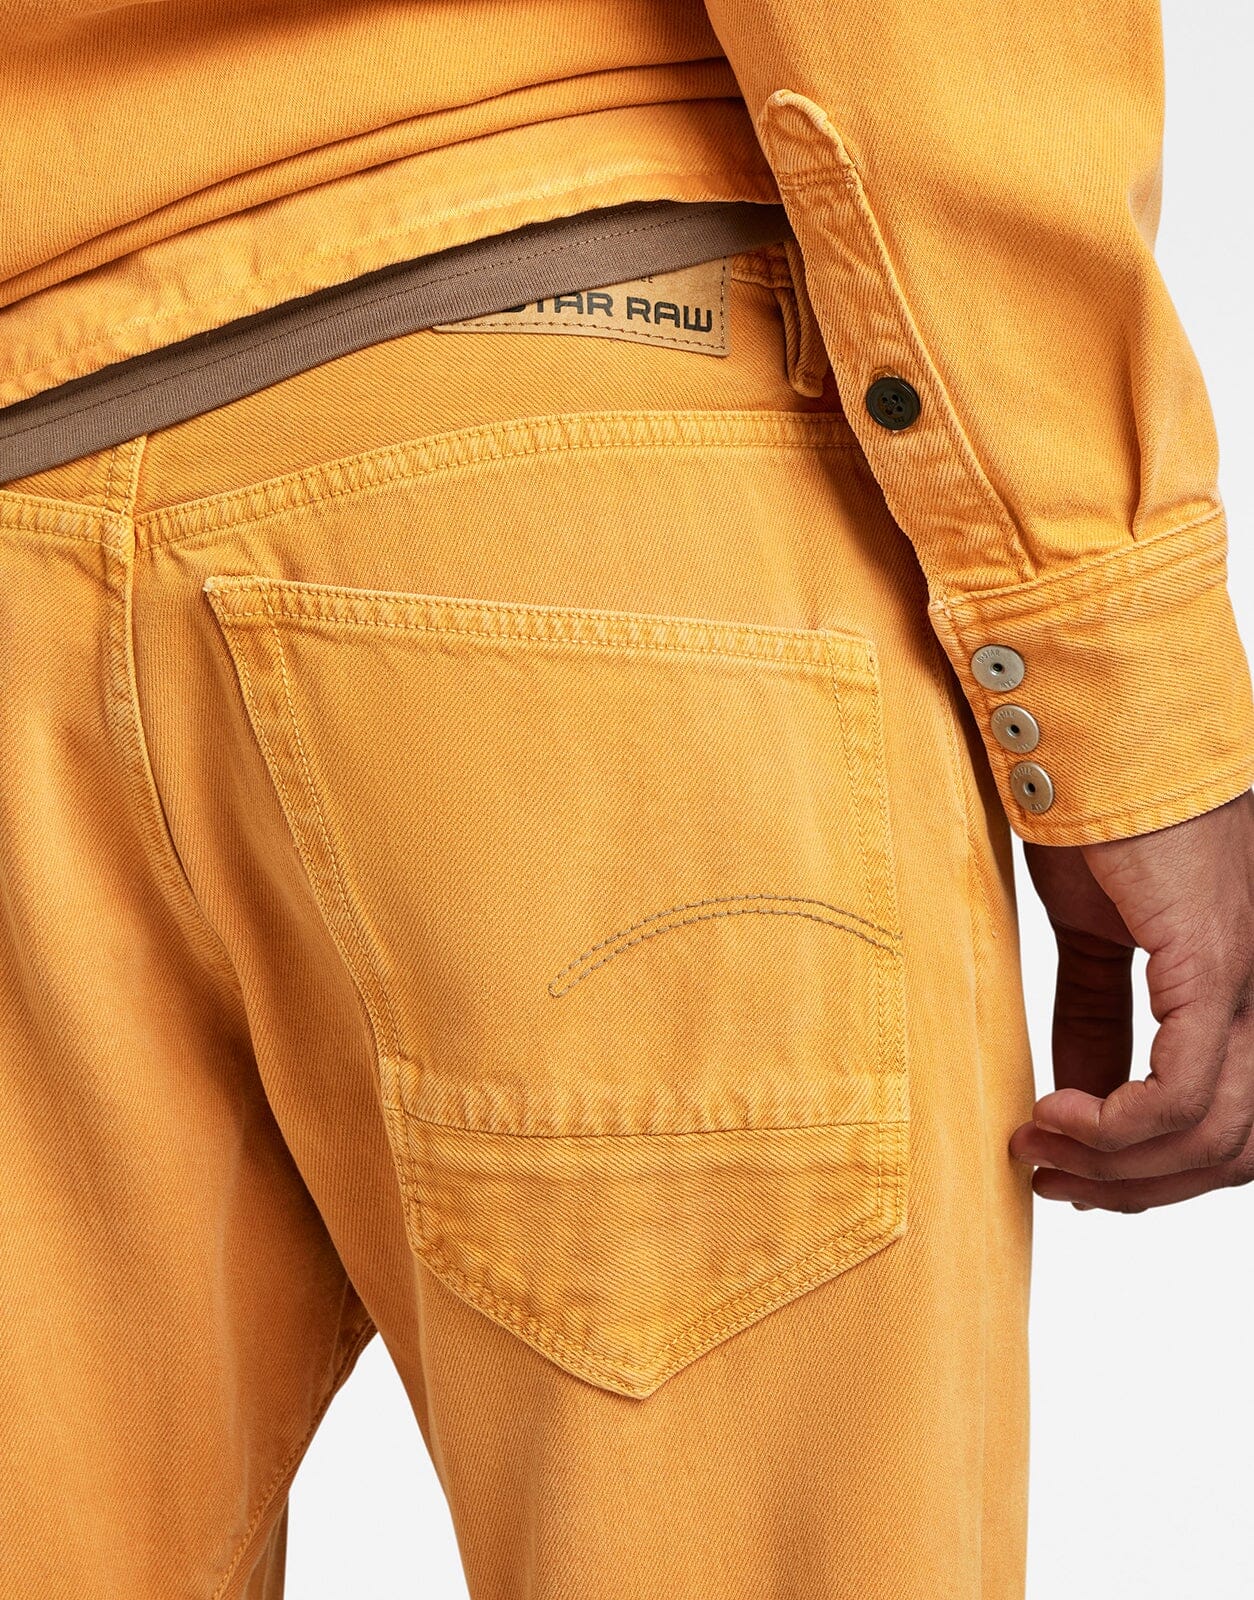 G-Star RAW Arc 3D Rharvest Jeans - Subwear